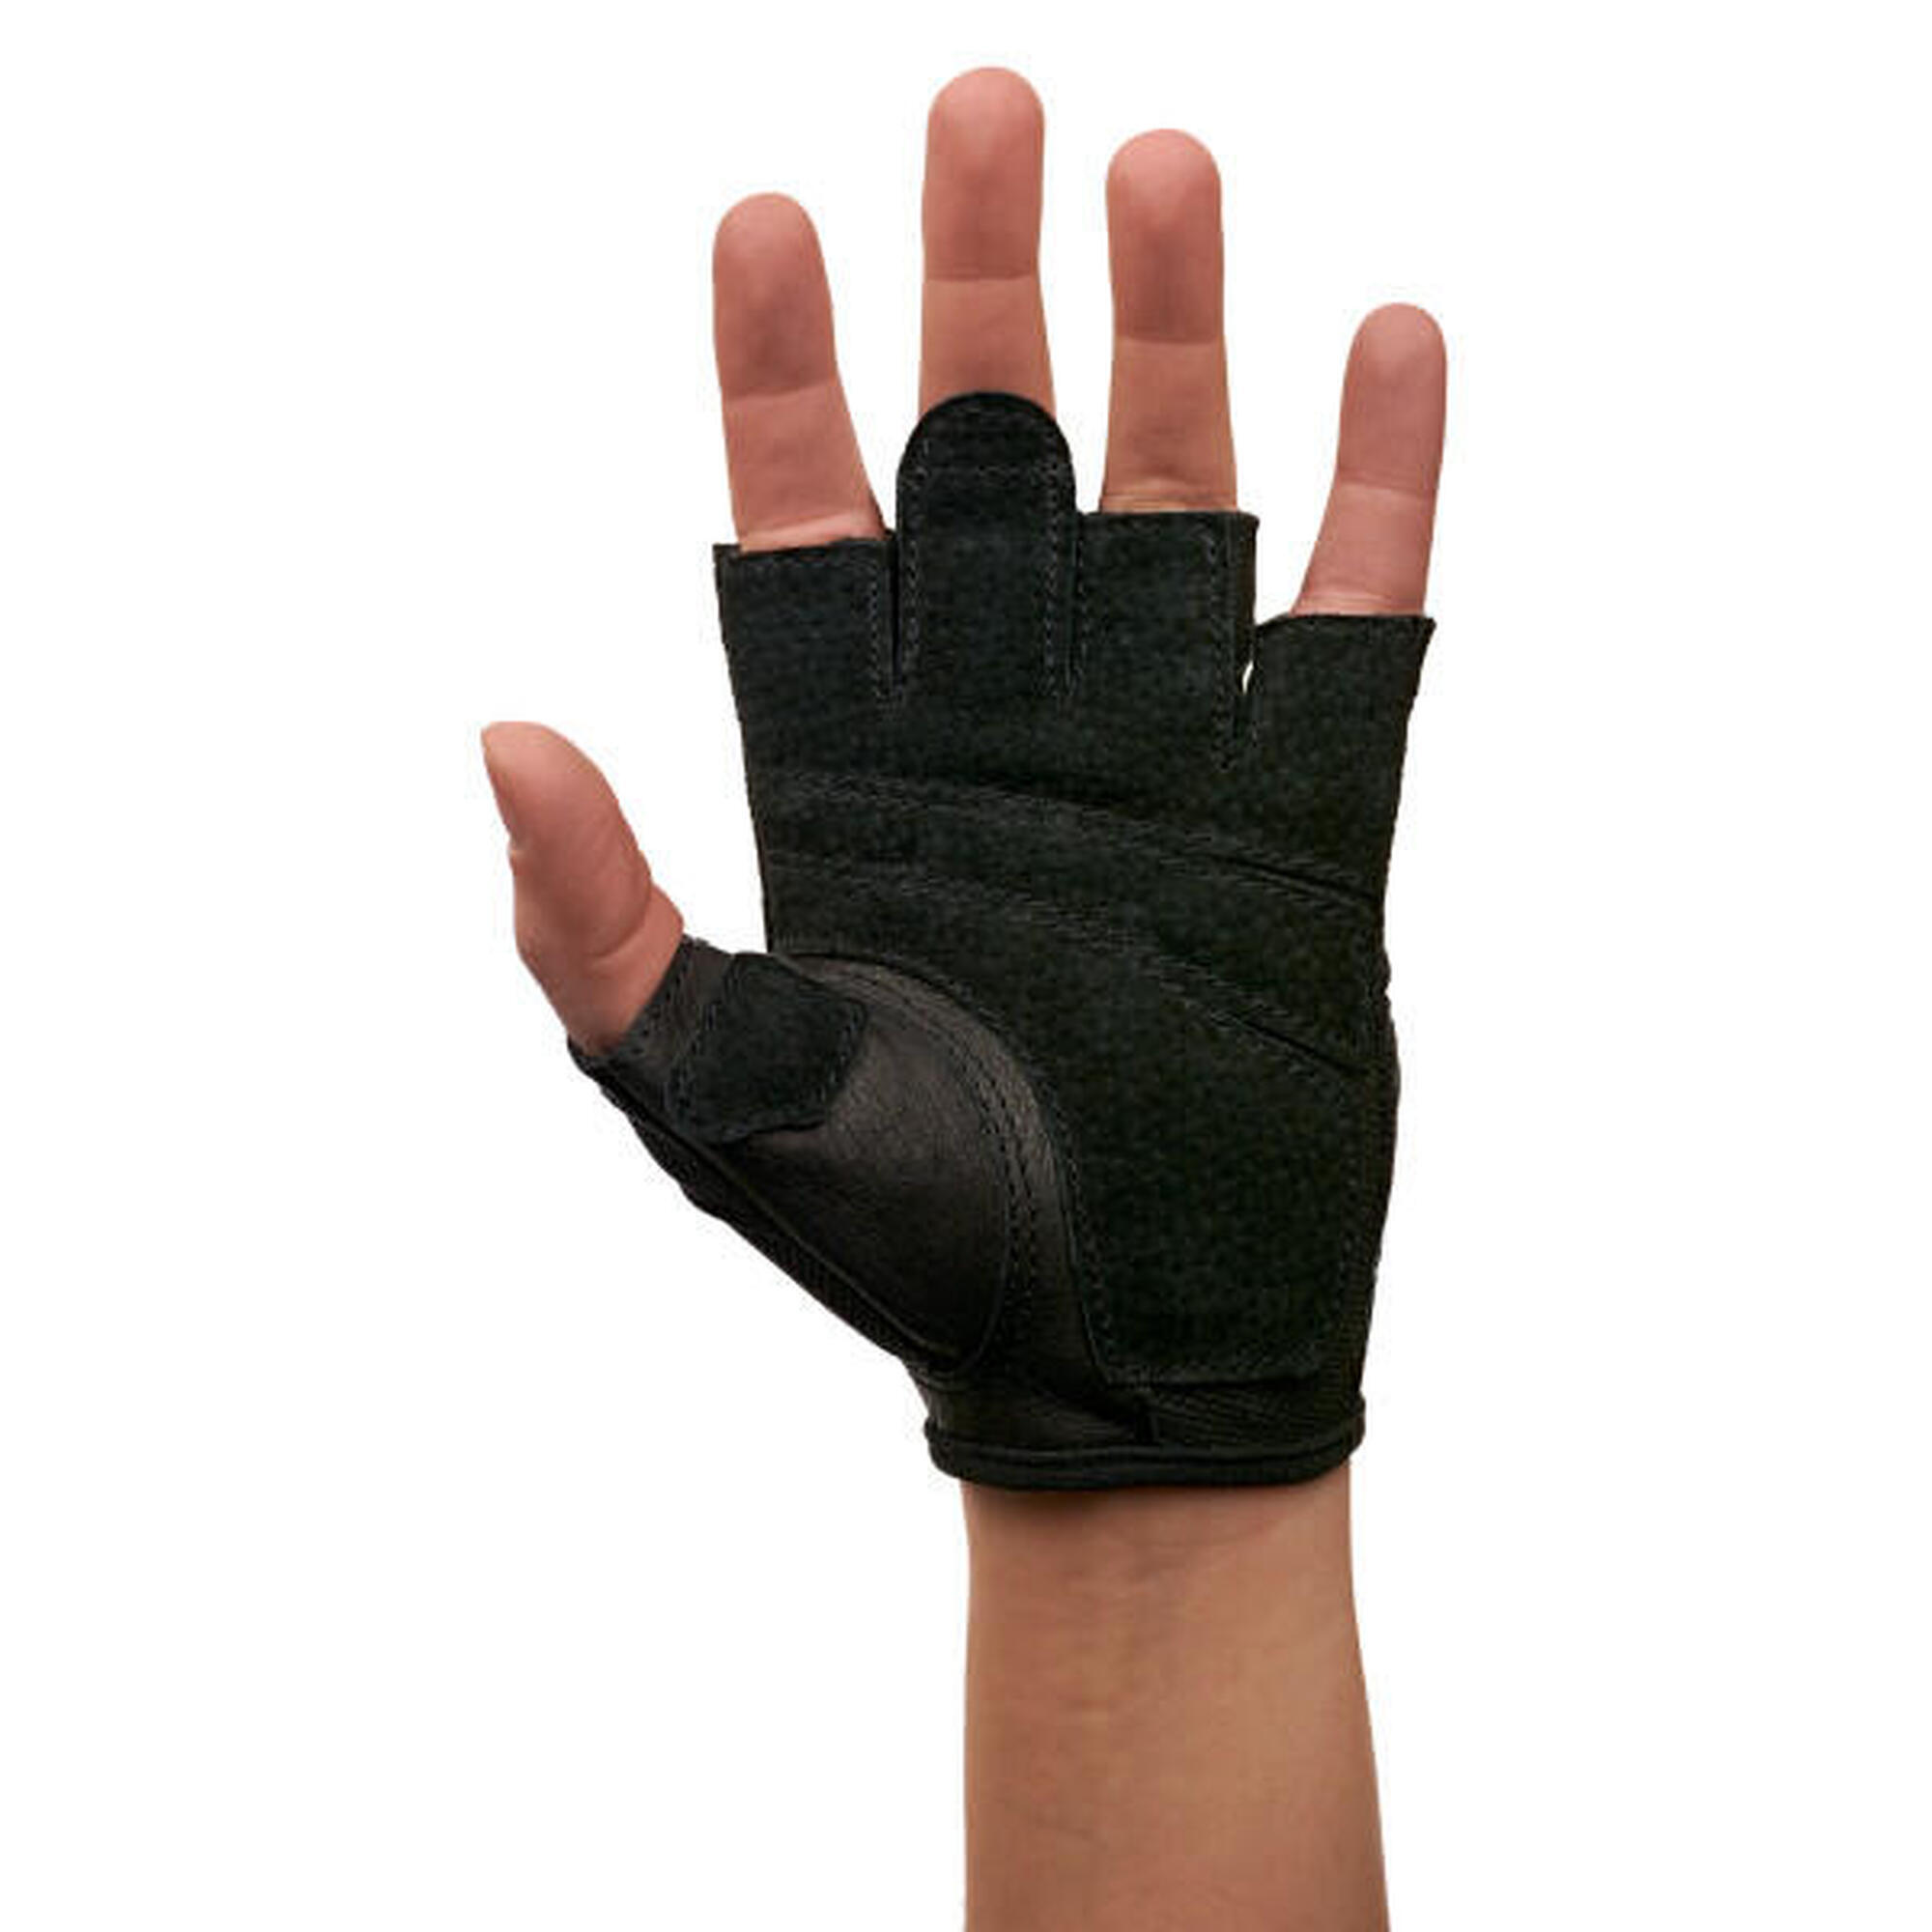 harb wmn's power gloves black m